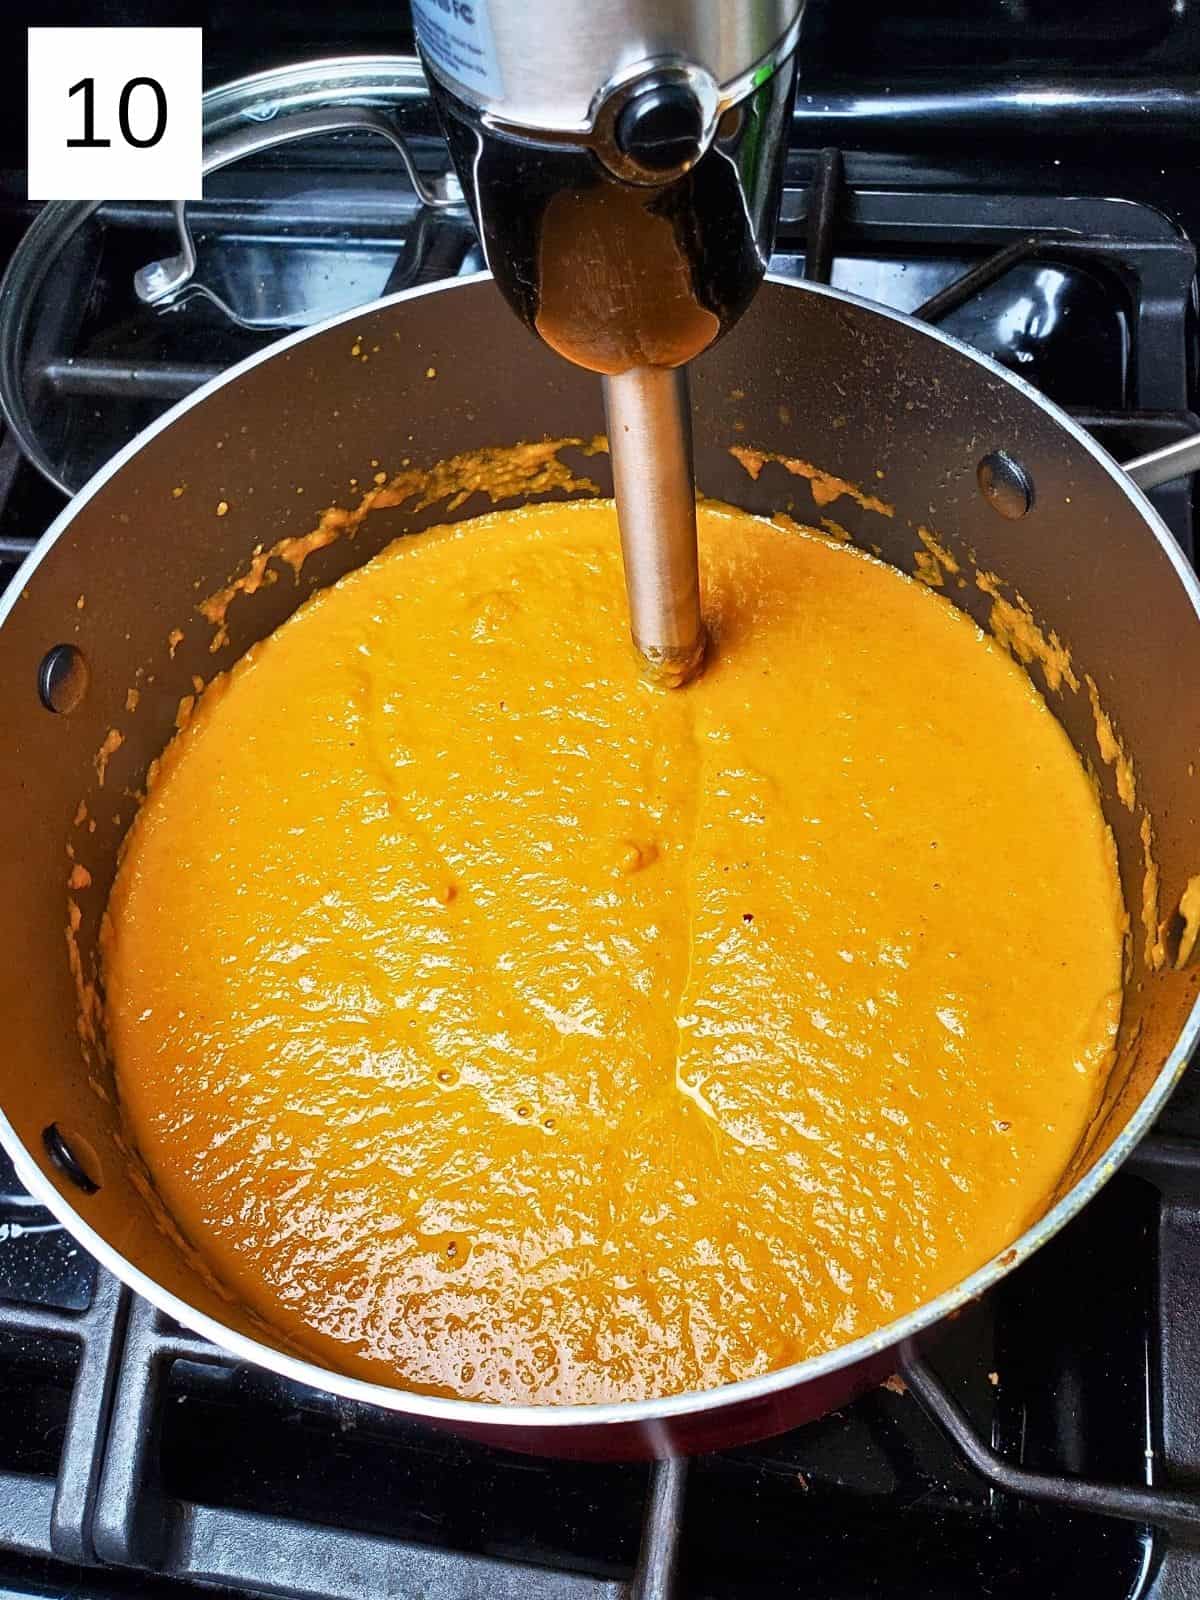 blending the carrot ginger soup mixture using an immersion blender in a pot.